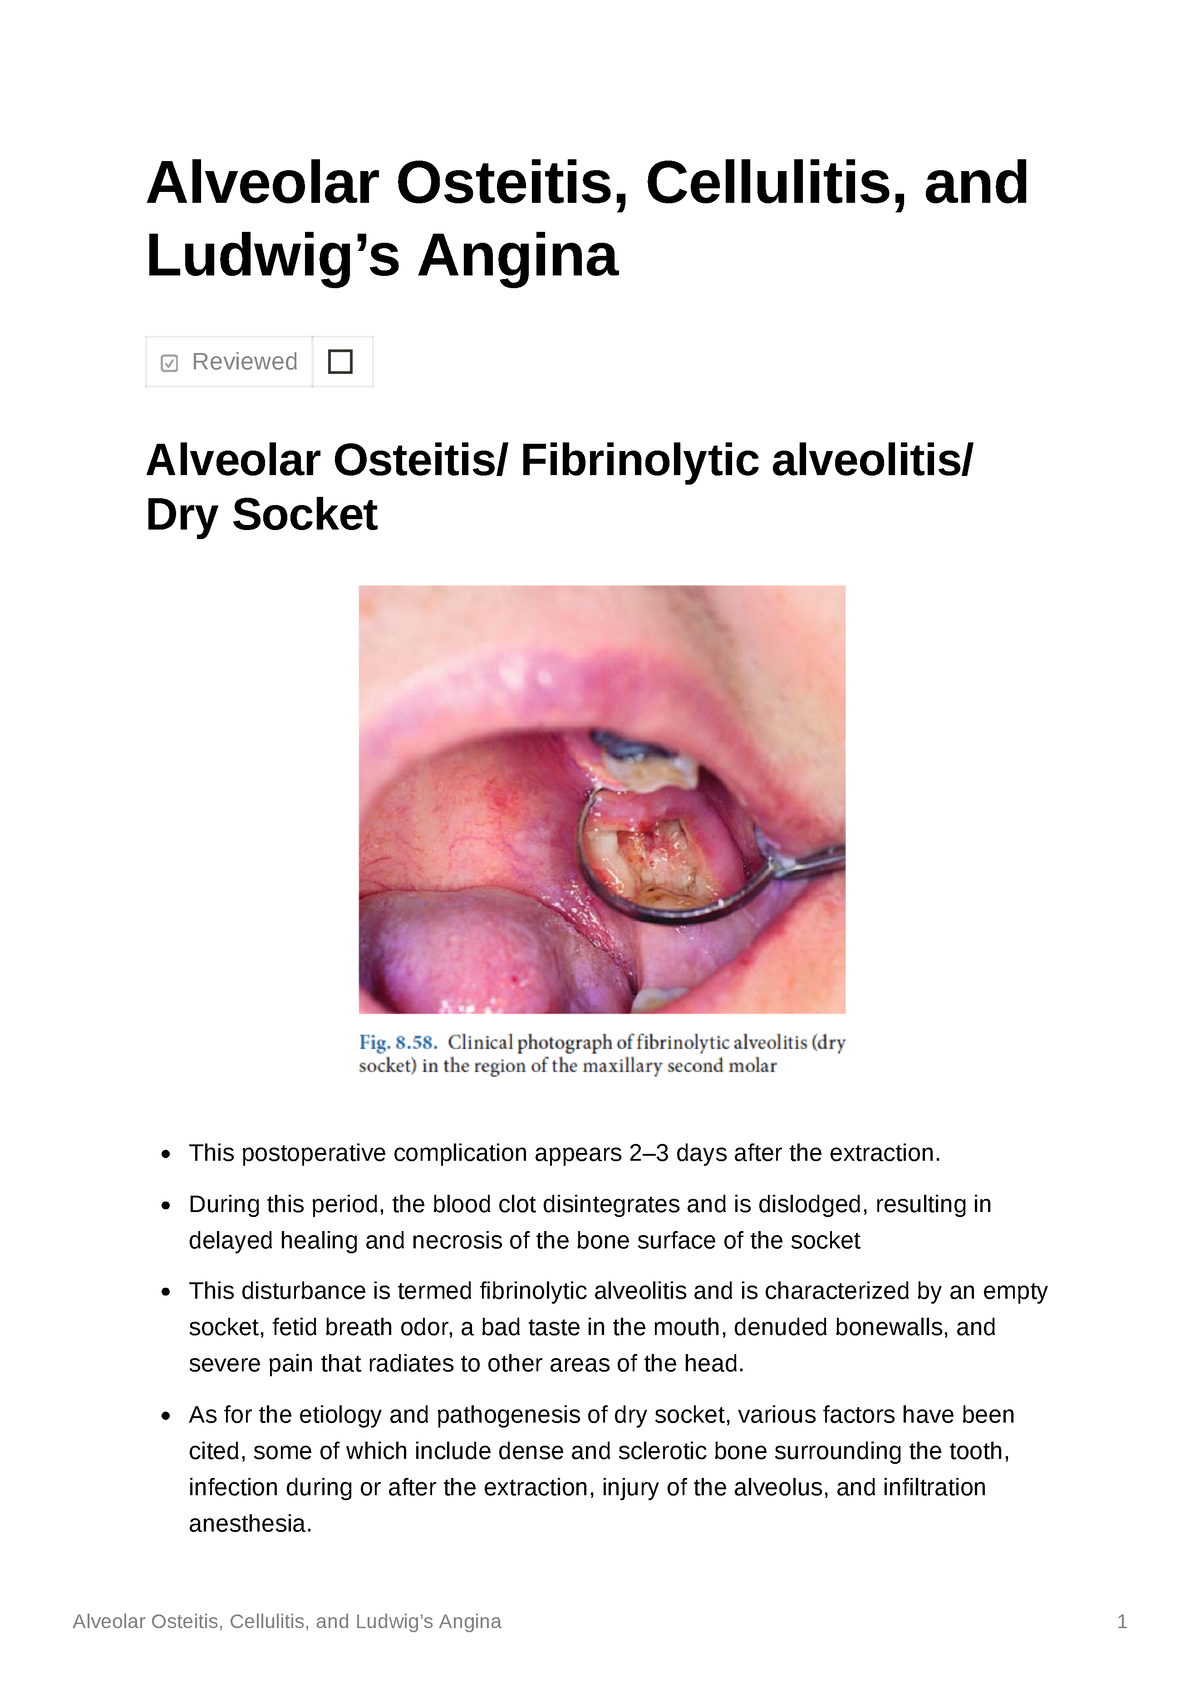 Alveolar Osteitis Cellulitis And Ludwigs Angina Alveolar Osteitis Cellulitis And Ludwigs 1506